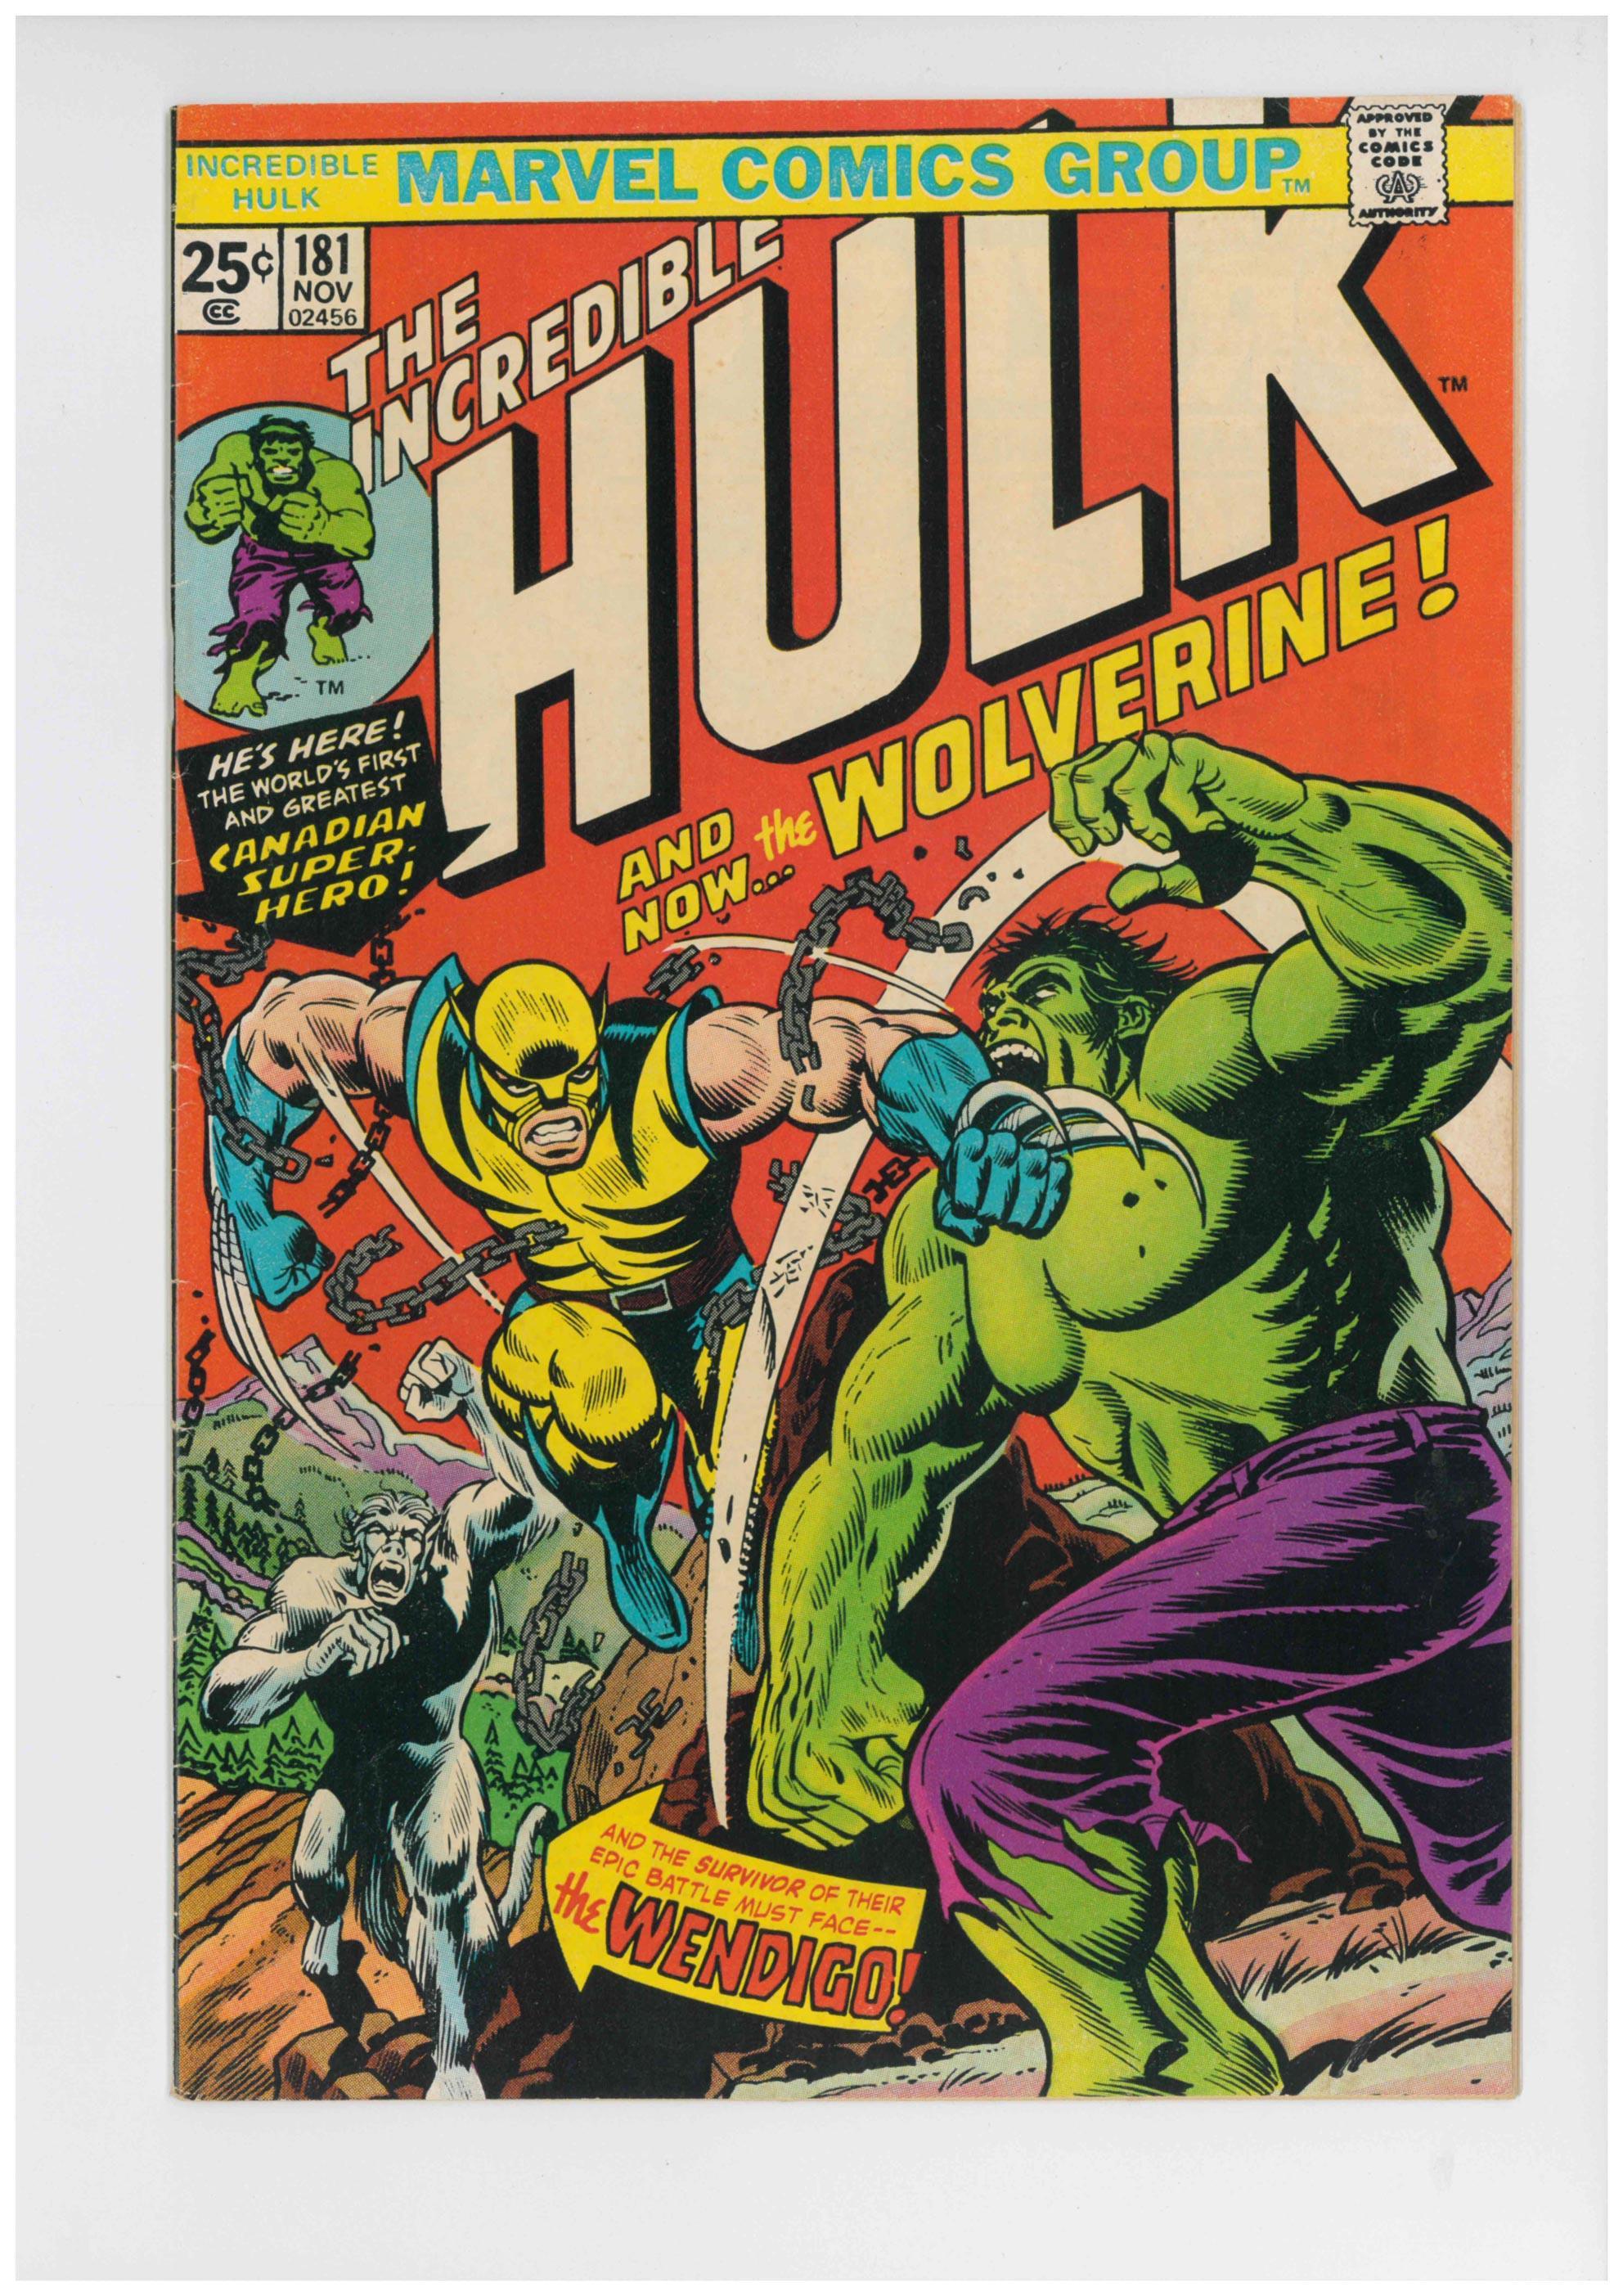 INCREDIBLE HULK (1962) #181 (FN) - FIRST FULL APPEARANCE OF WOLVERINE - Kings Comics